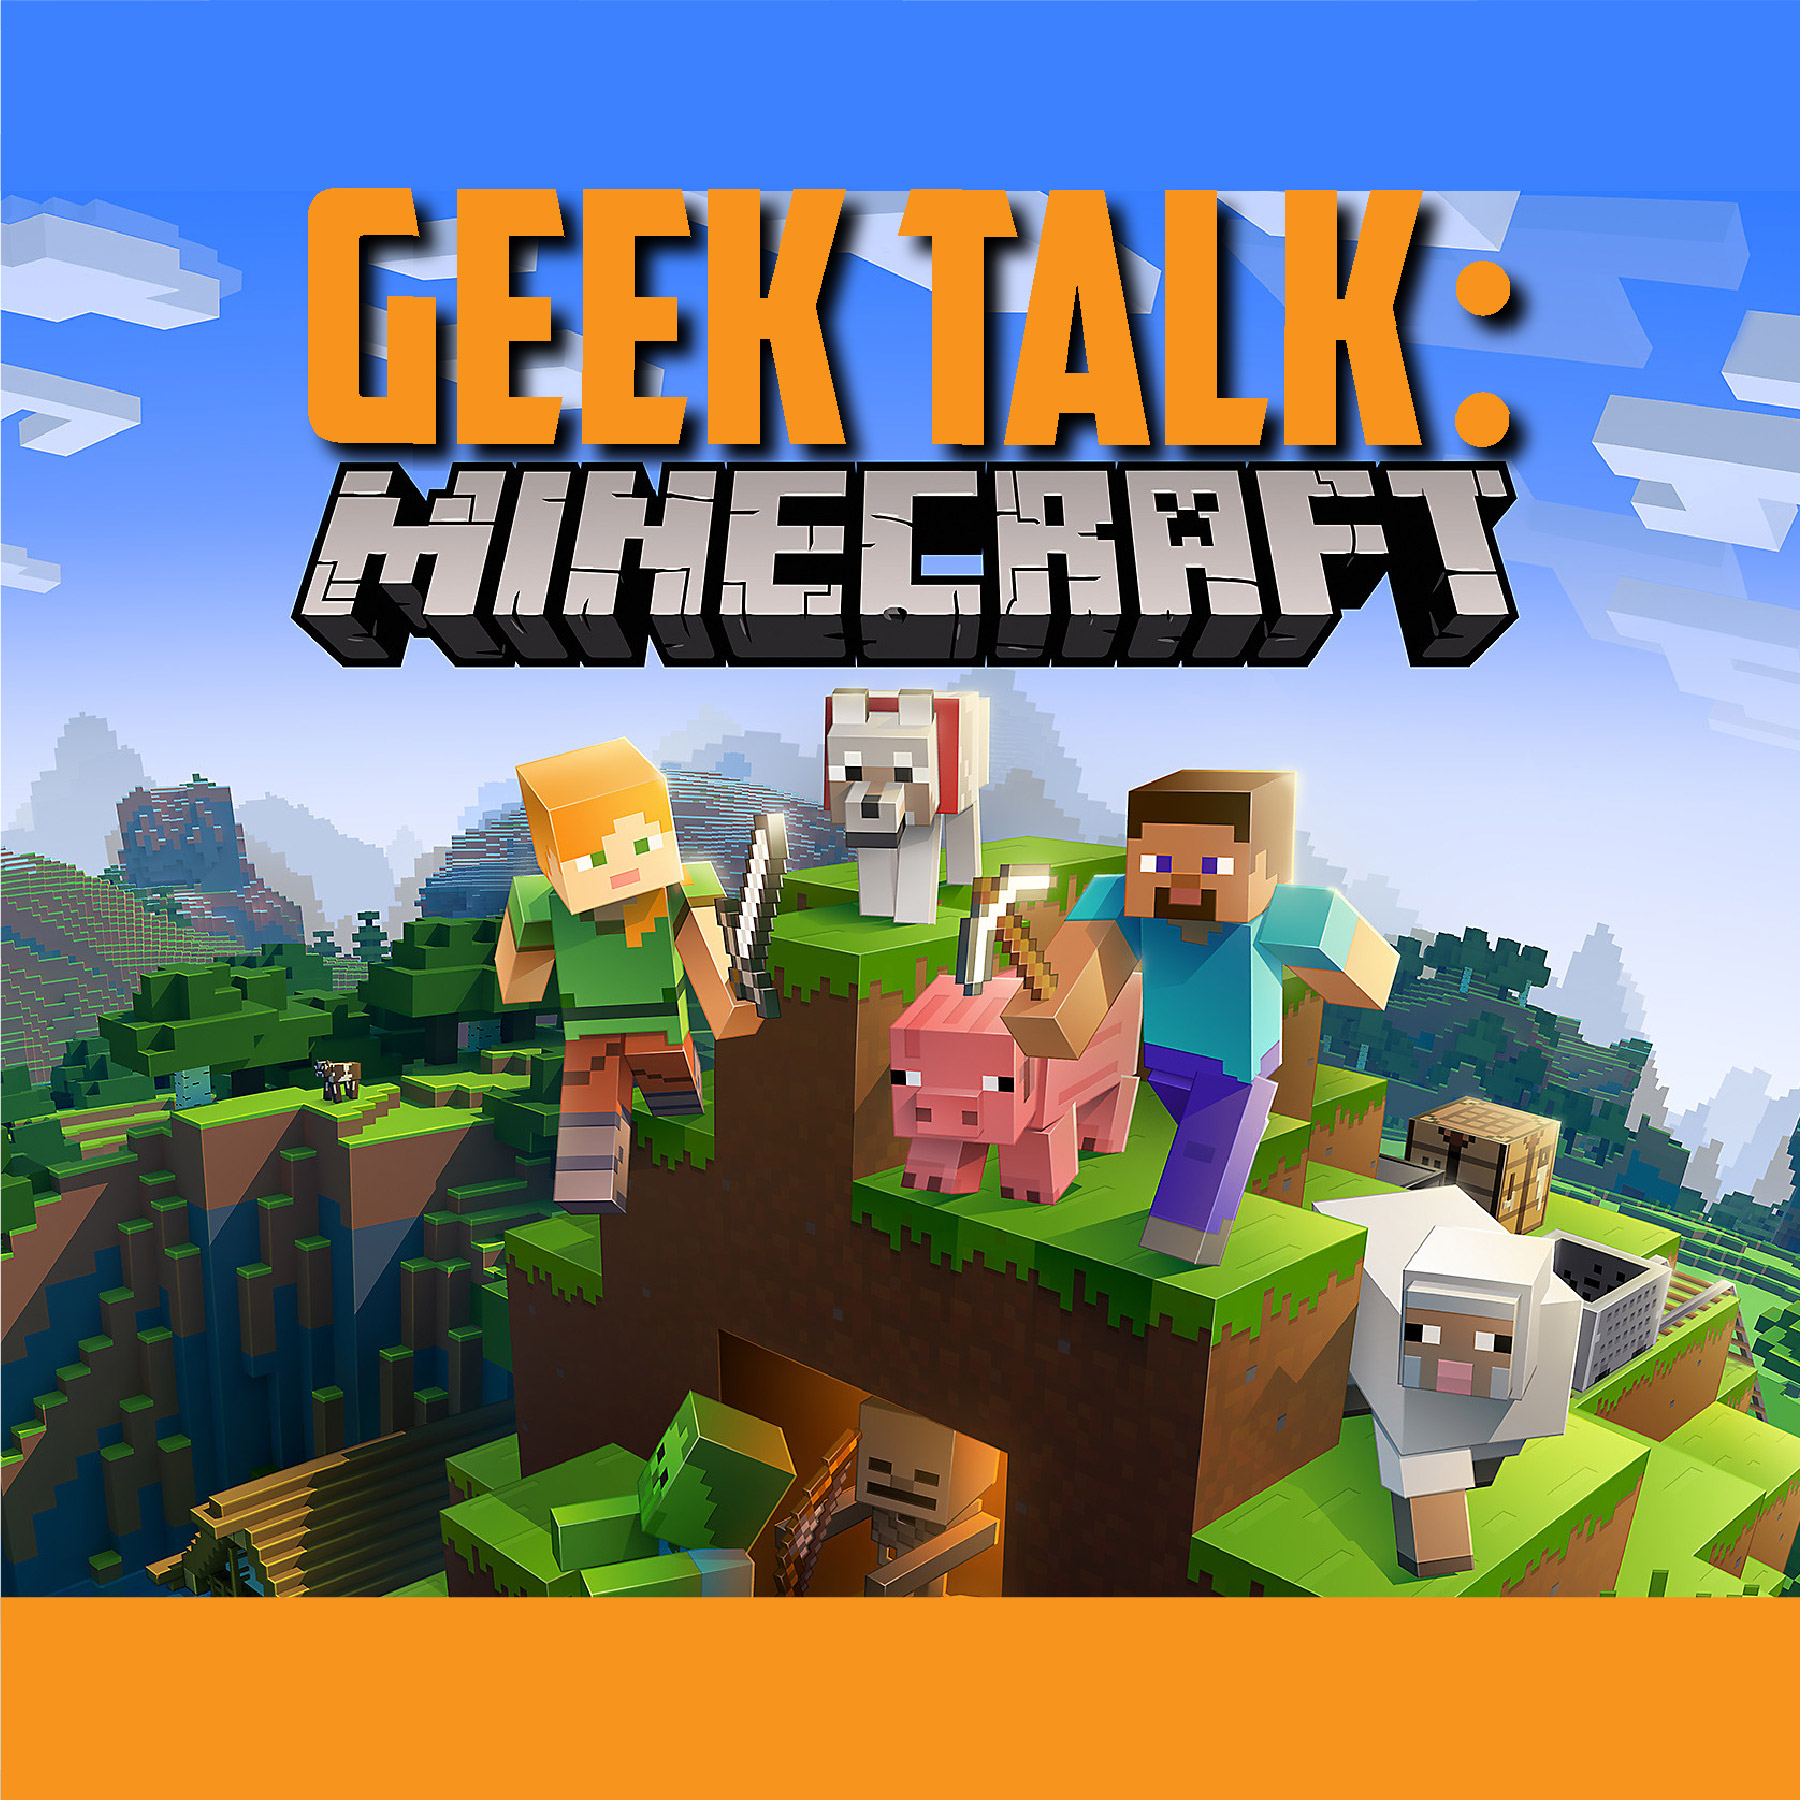 minecraft characters with "Geek Talk: Minecraft" written above